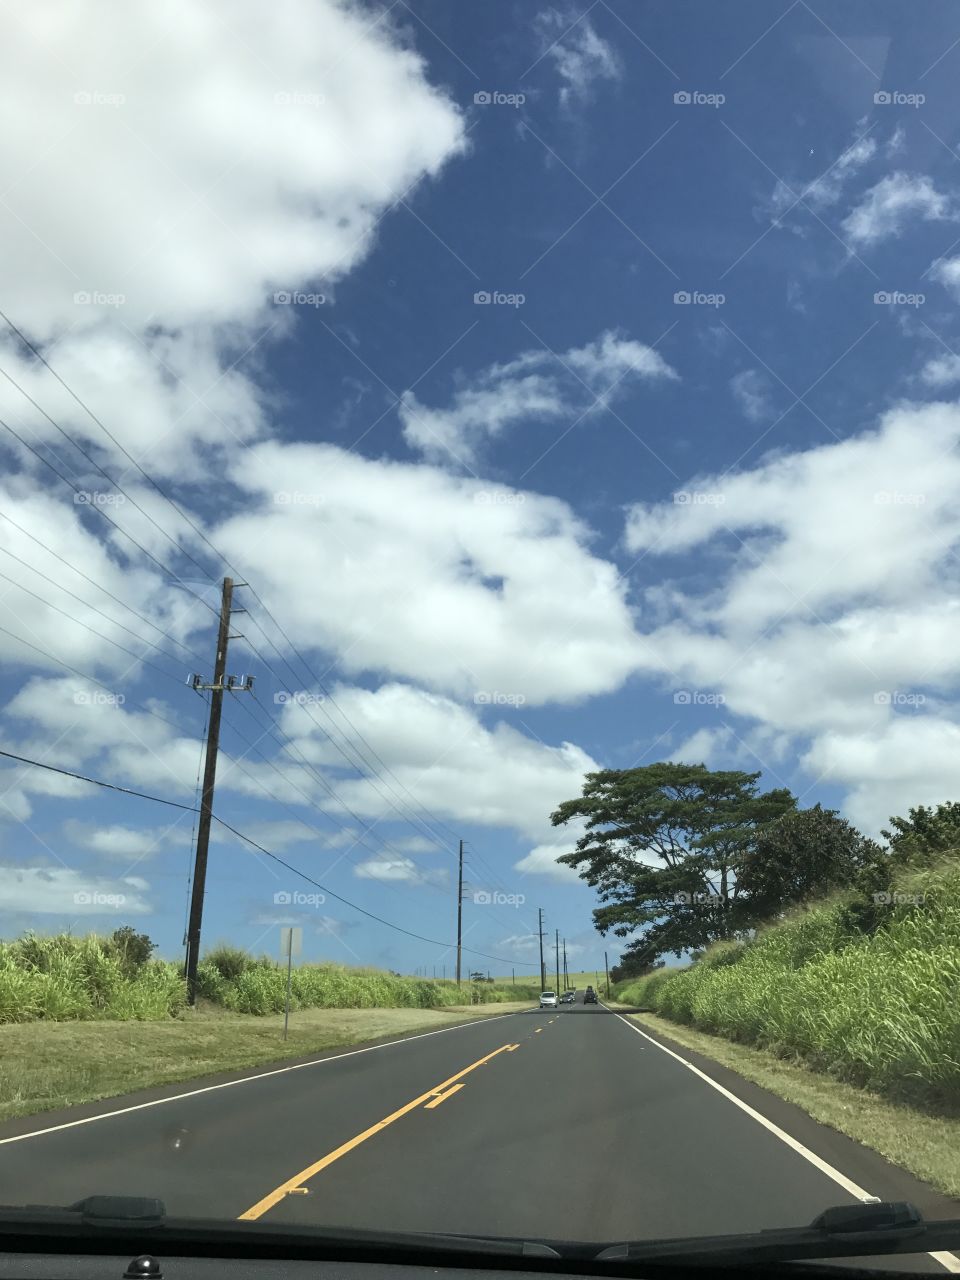 Hawaii Honolulu street view 